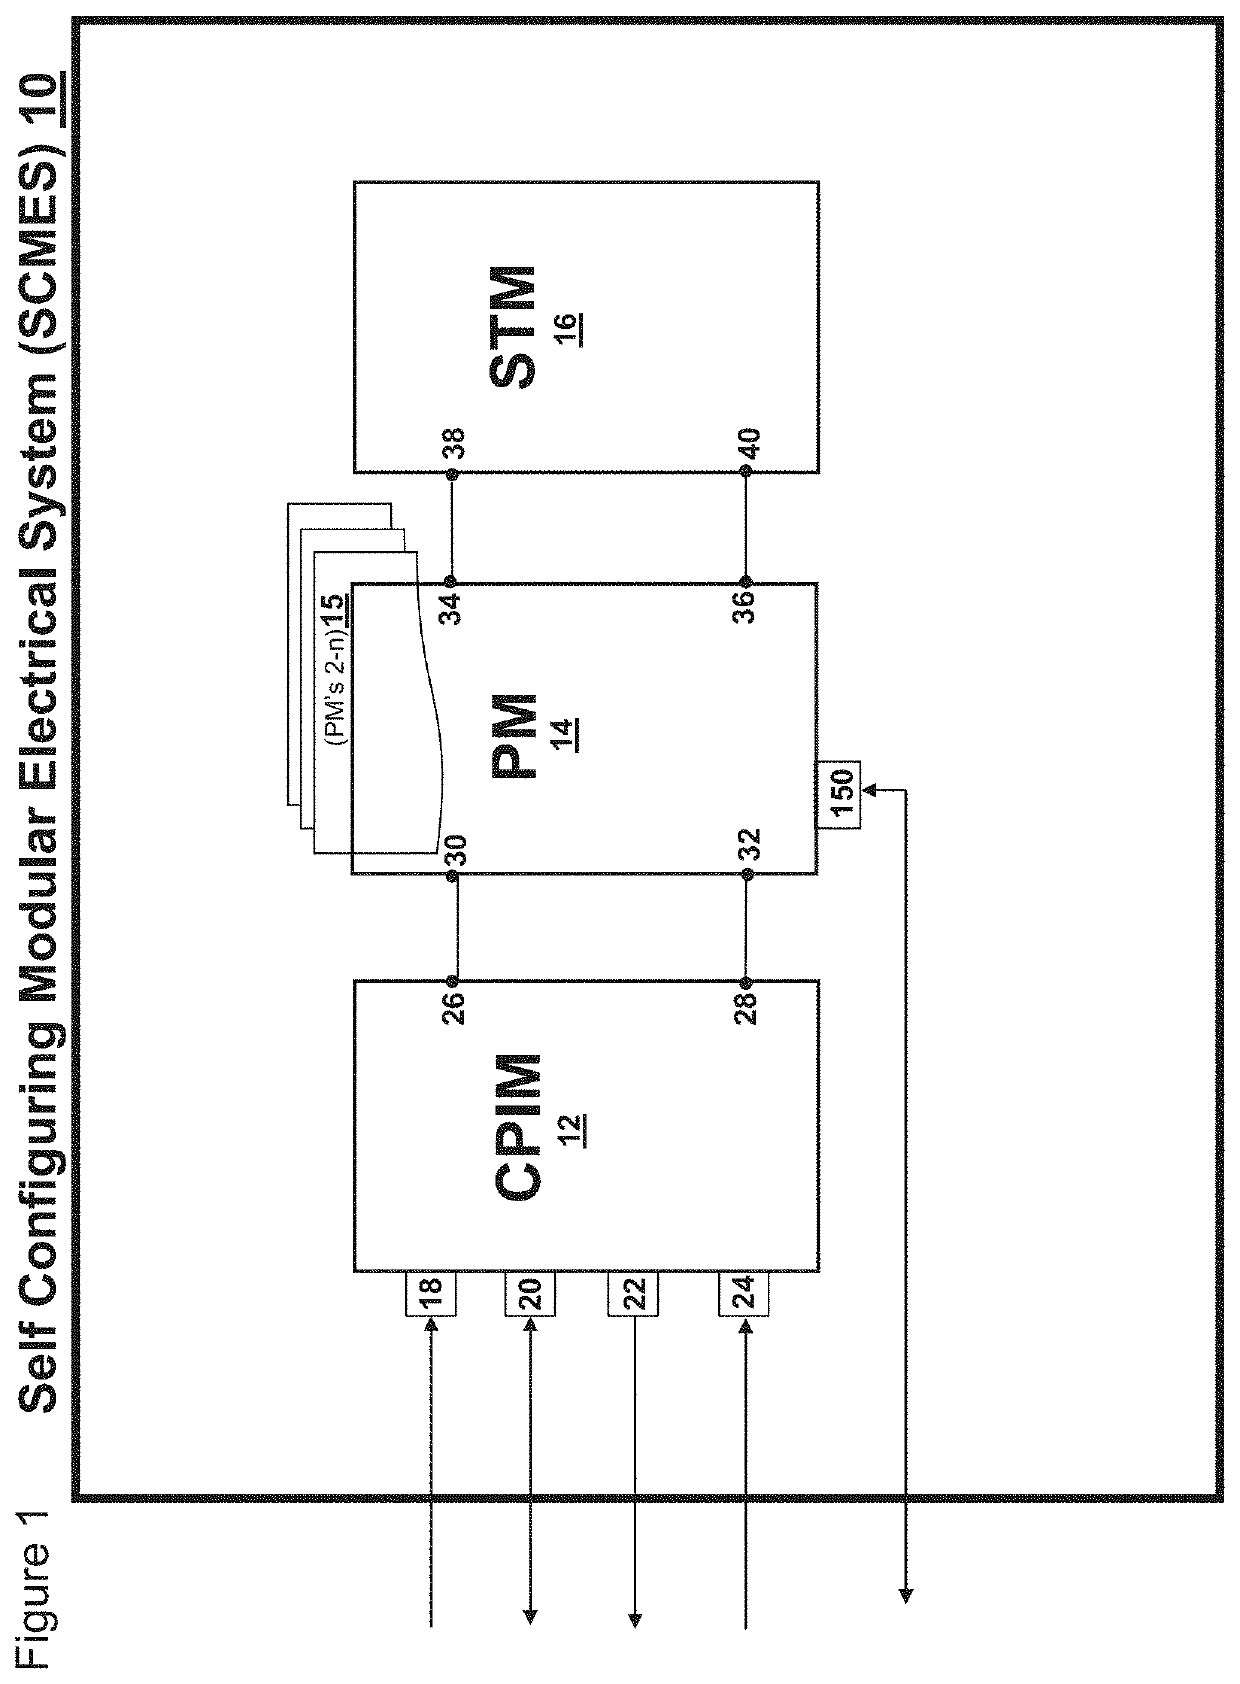 Self configuring modular electrical system